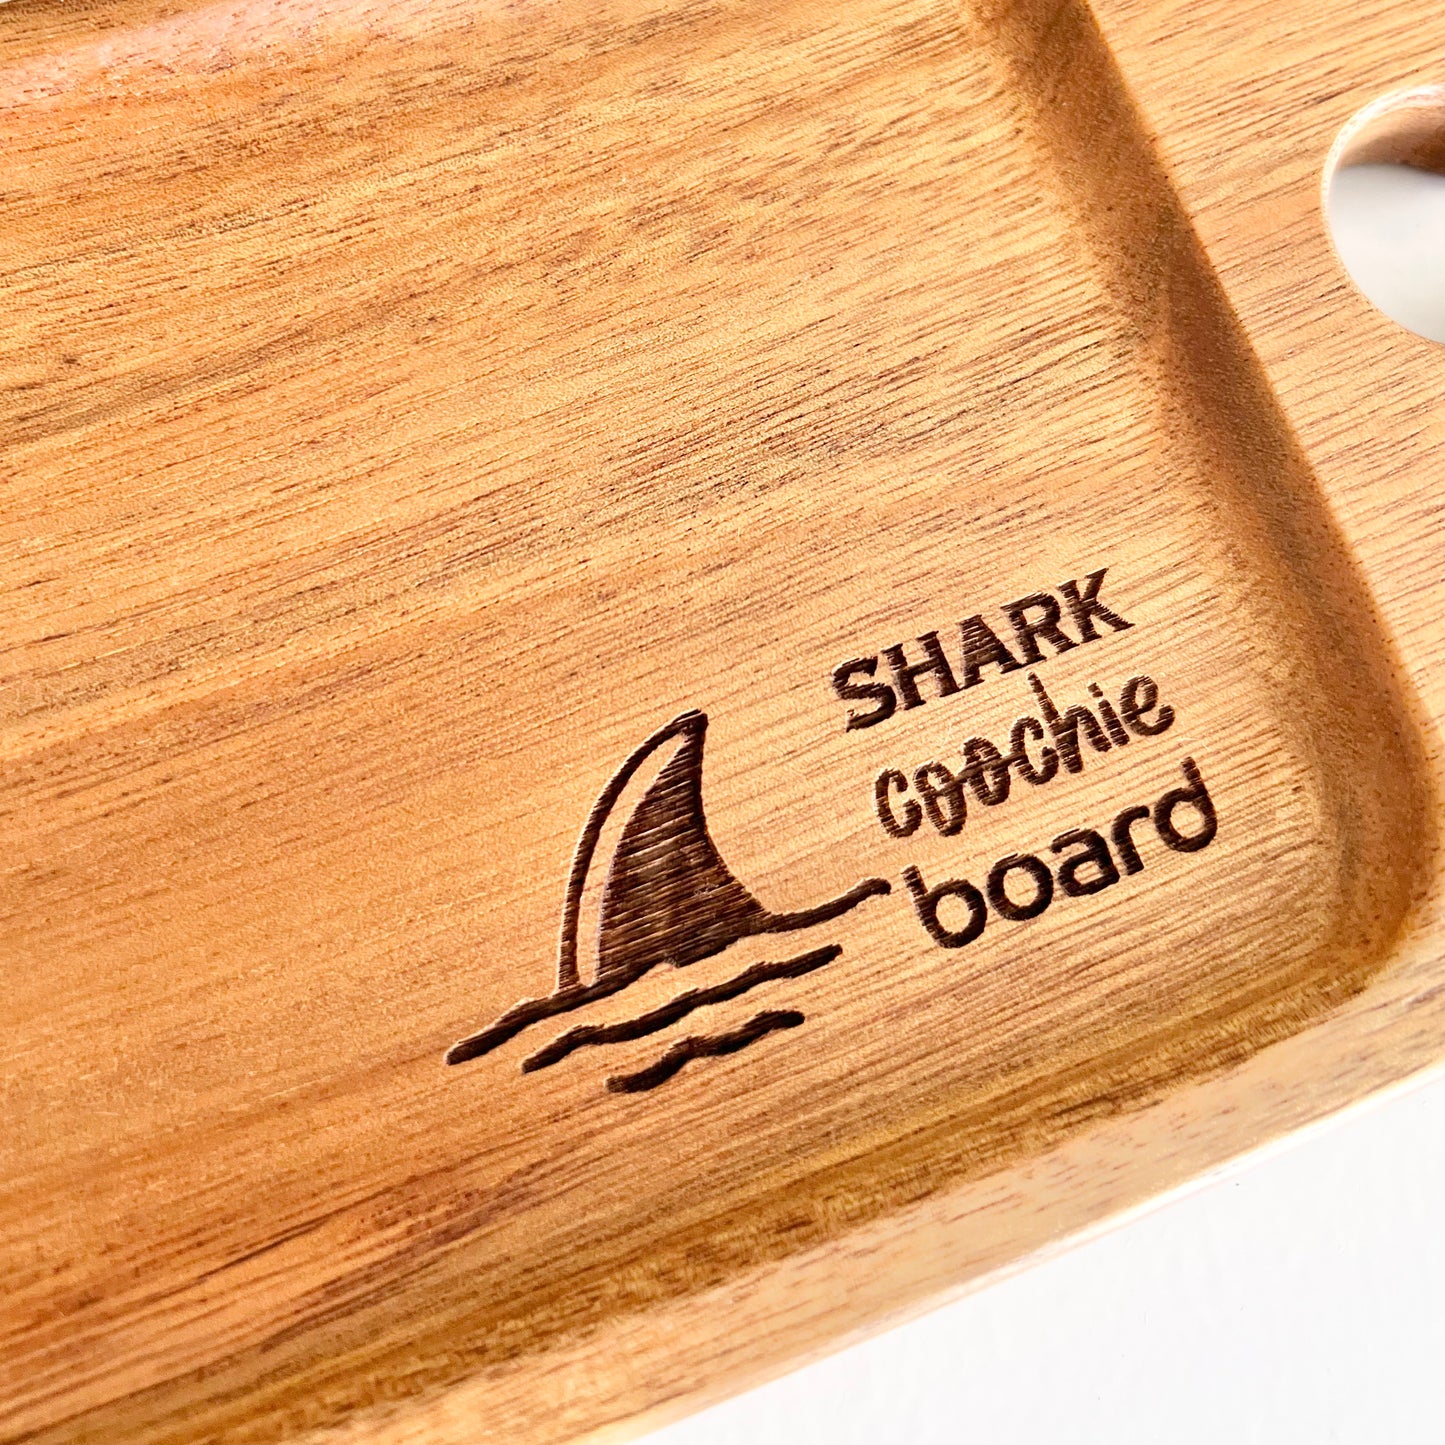 Personalised “shark coochie” board